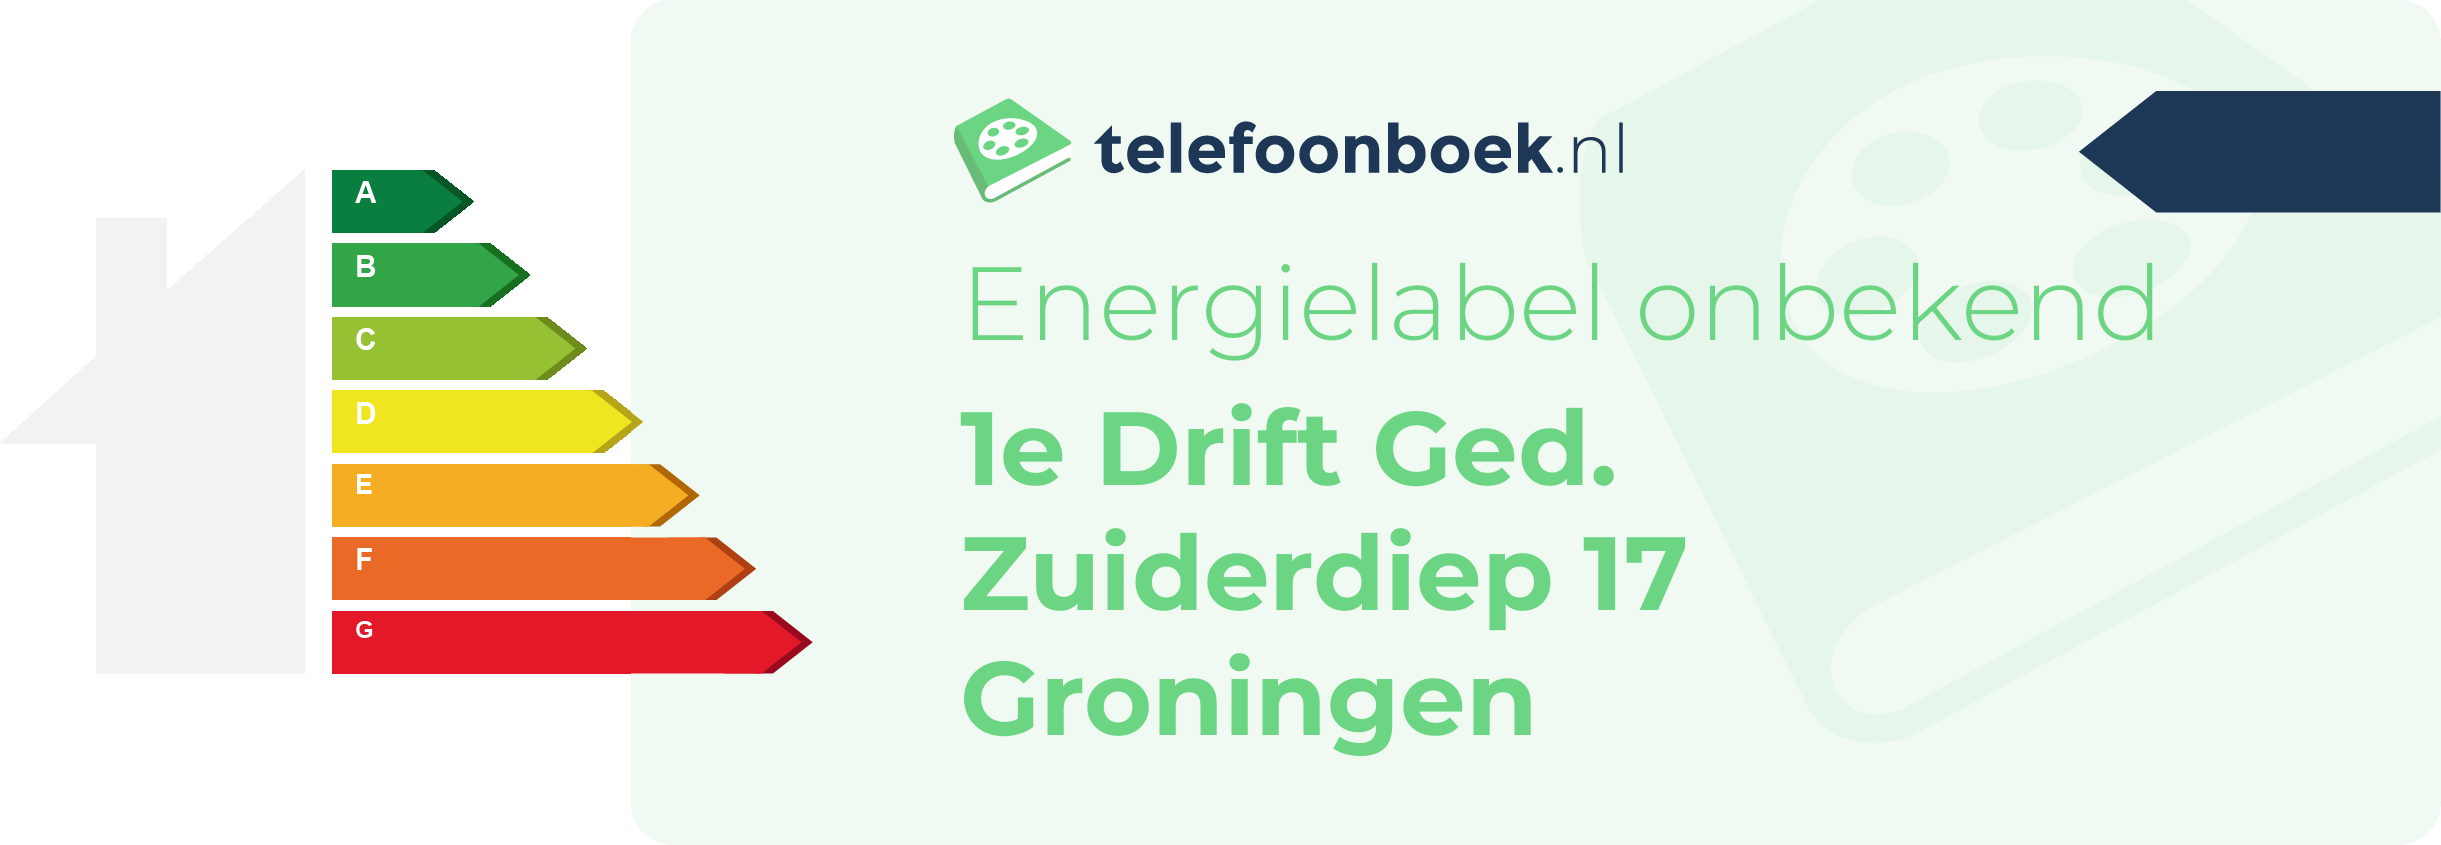 Energielabel 1e Drift Ged. Zuiderdiep 17 Groningen